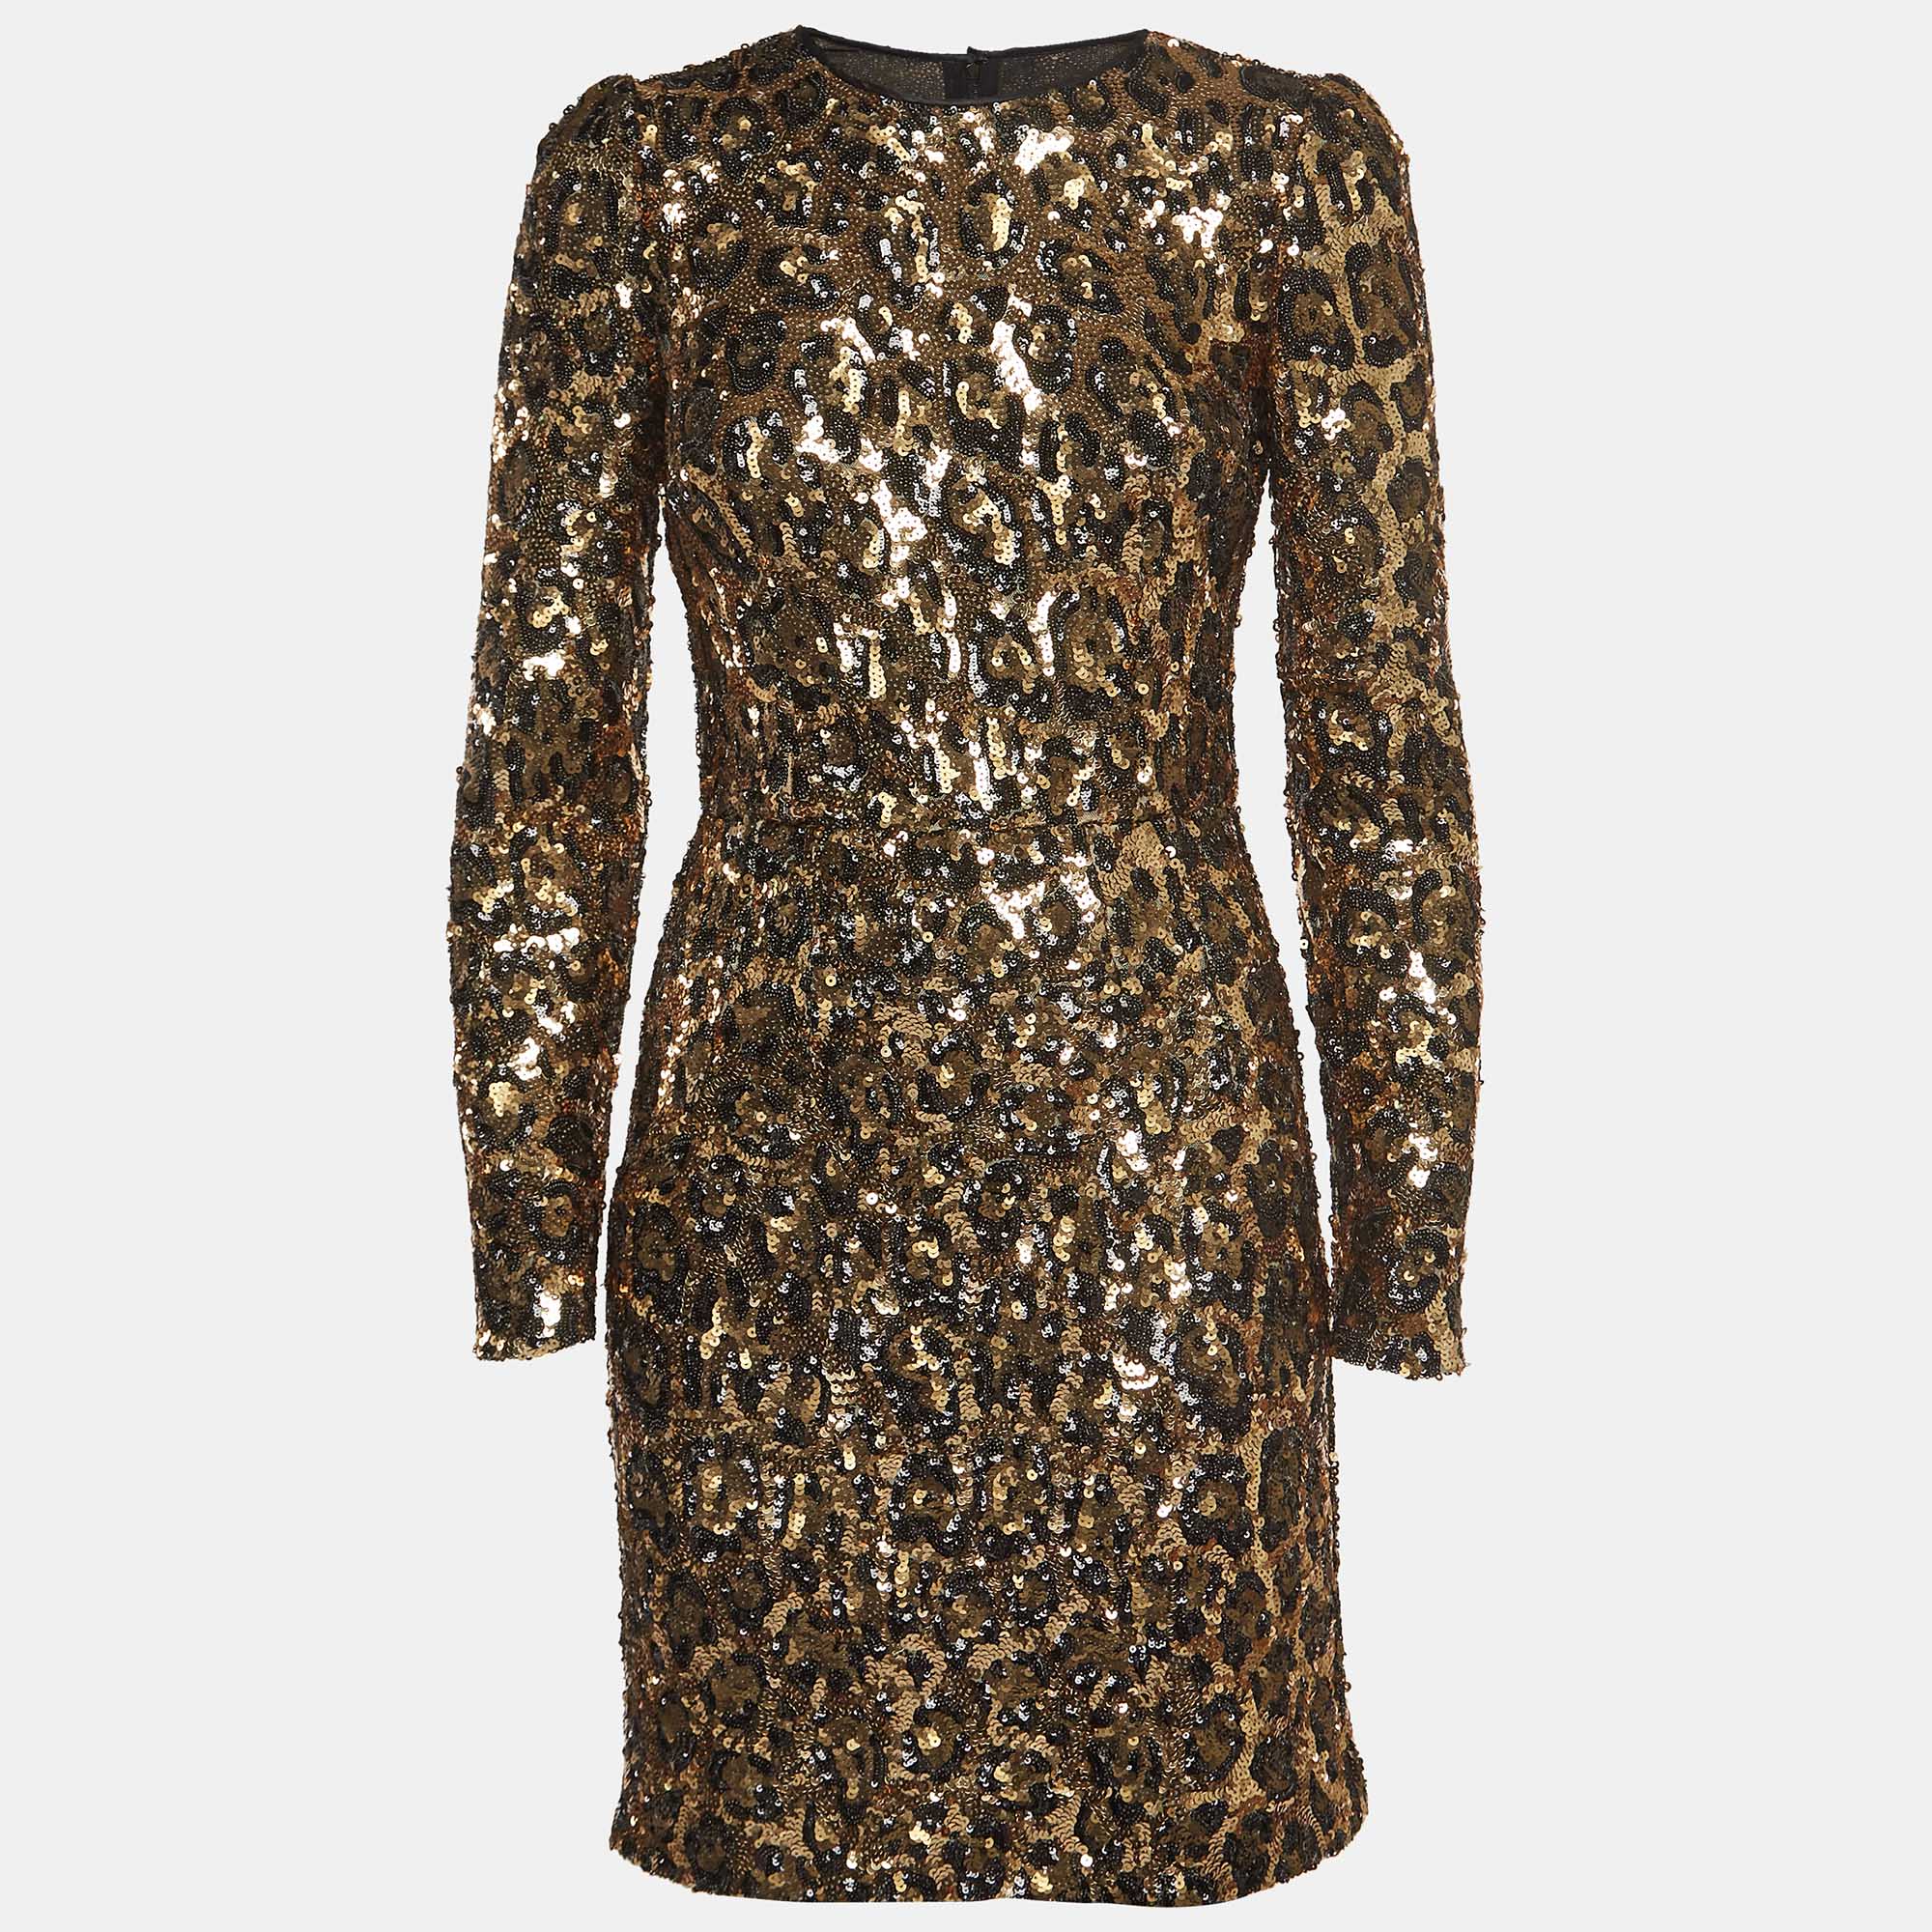 Dolce & gabbana gold/black leopard sequined mini dress s